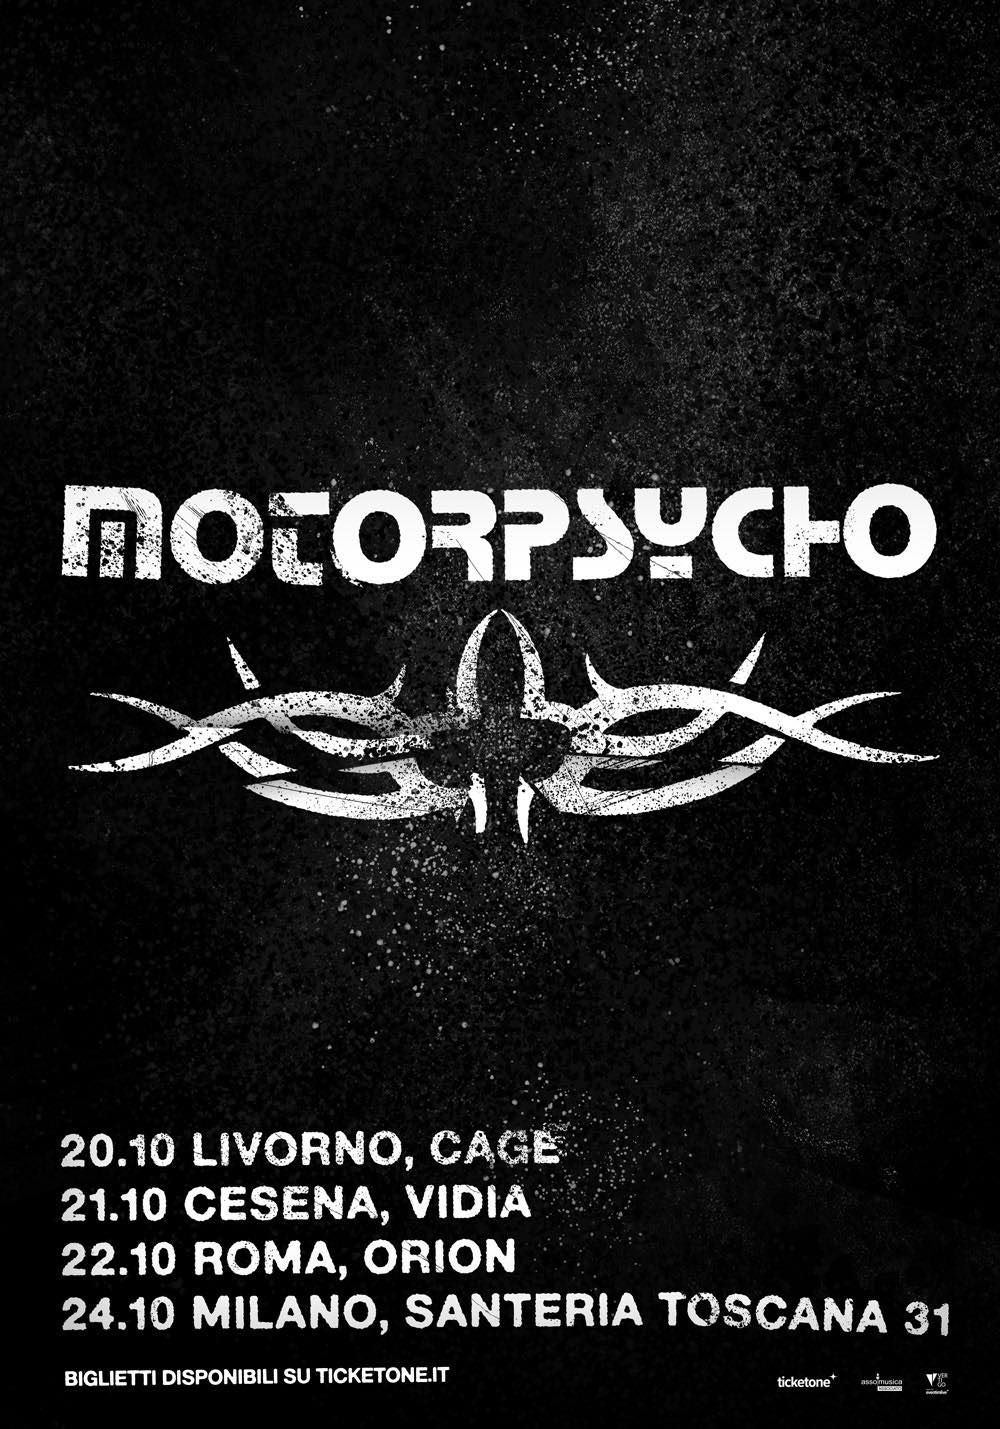 motorpsycho uk tour